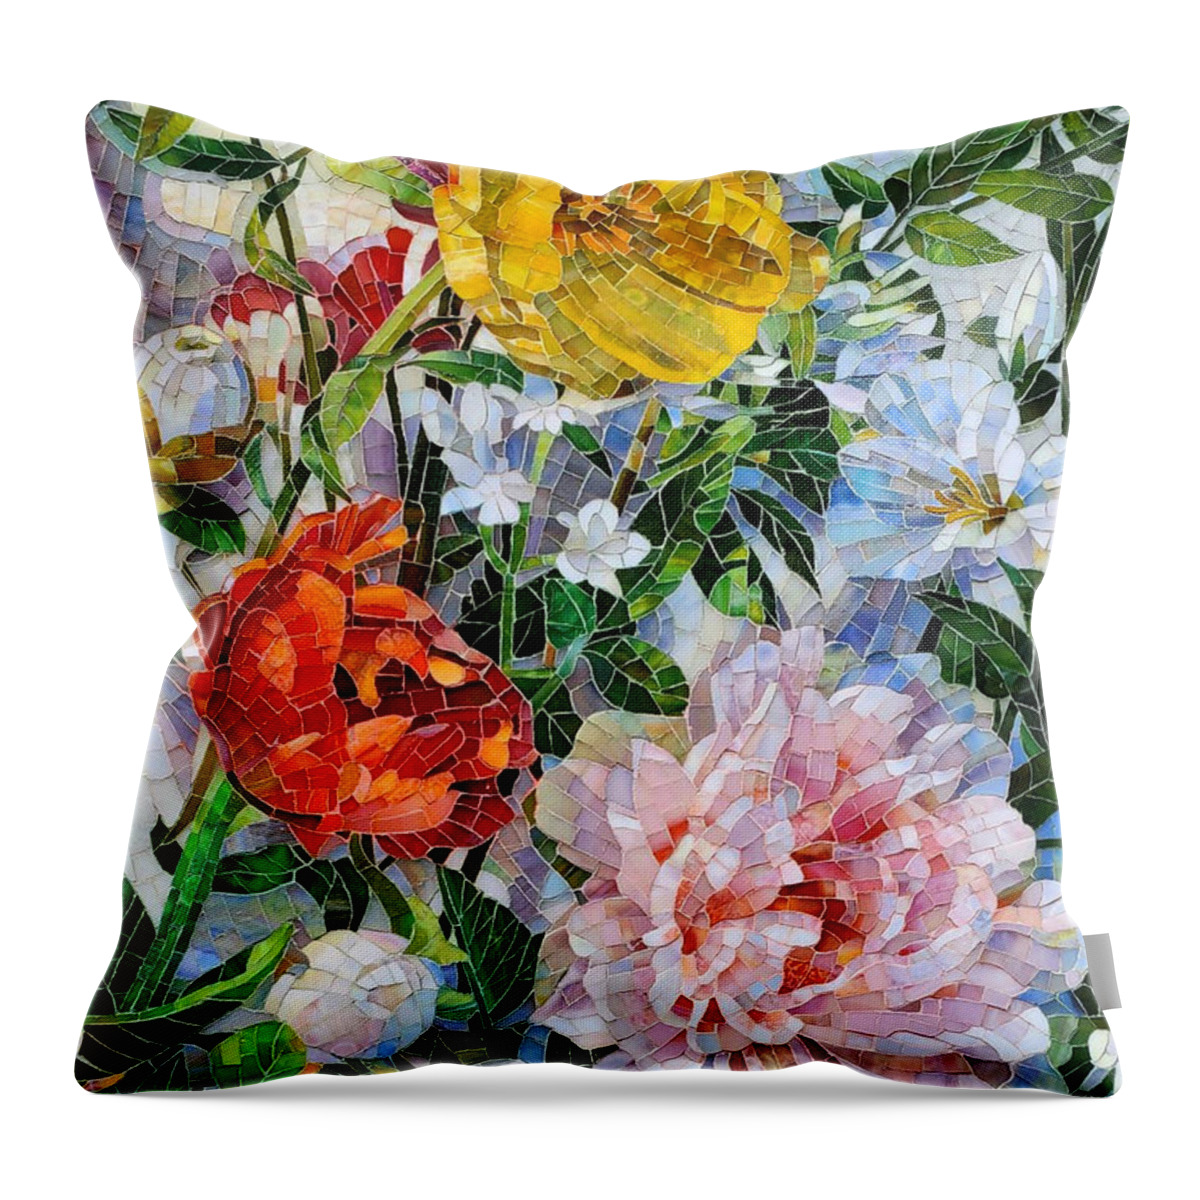 Flower mosaic Throw Pillow by Mia Tavonatti - Pixels